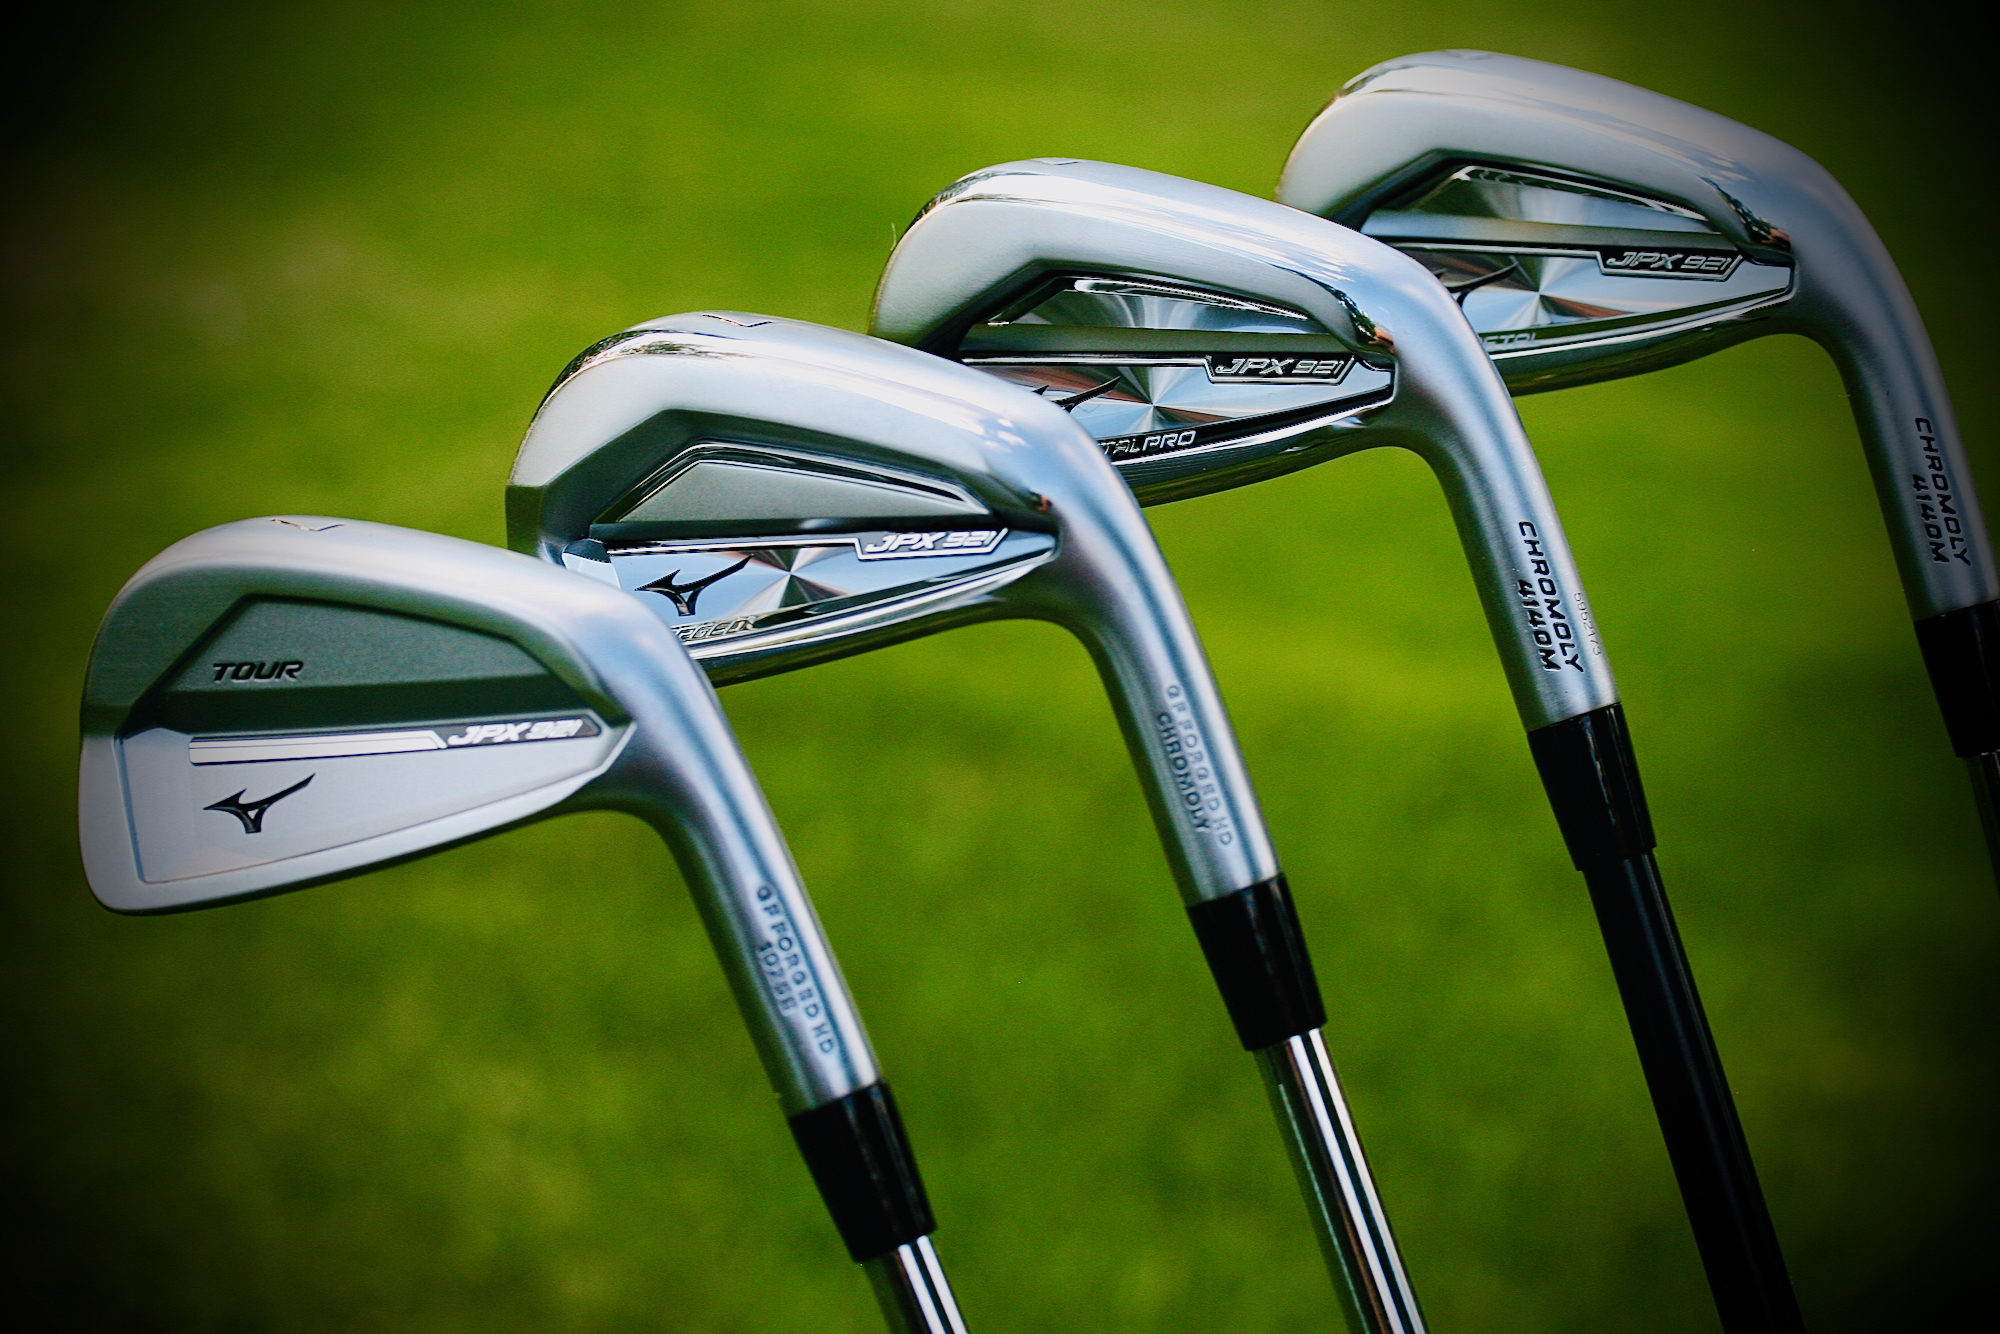 Buy > new mizuno golf clubs > in stock